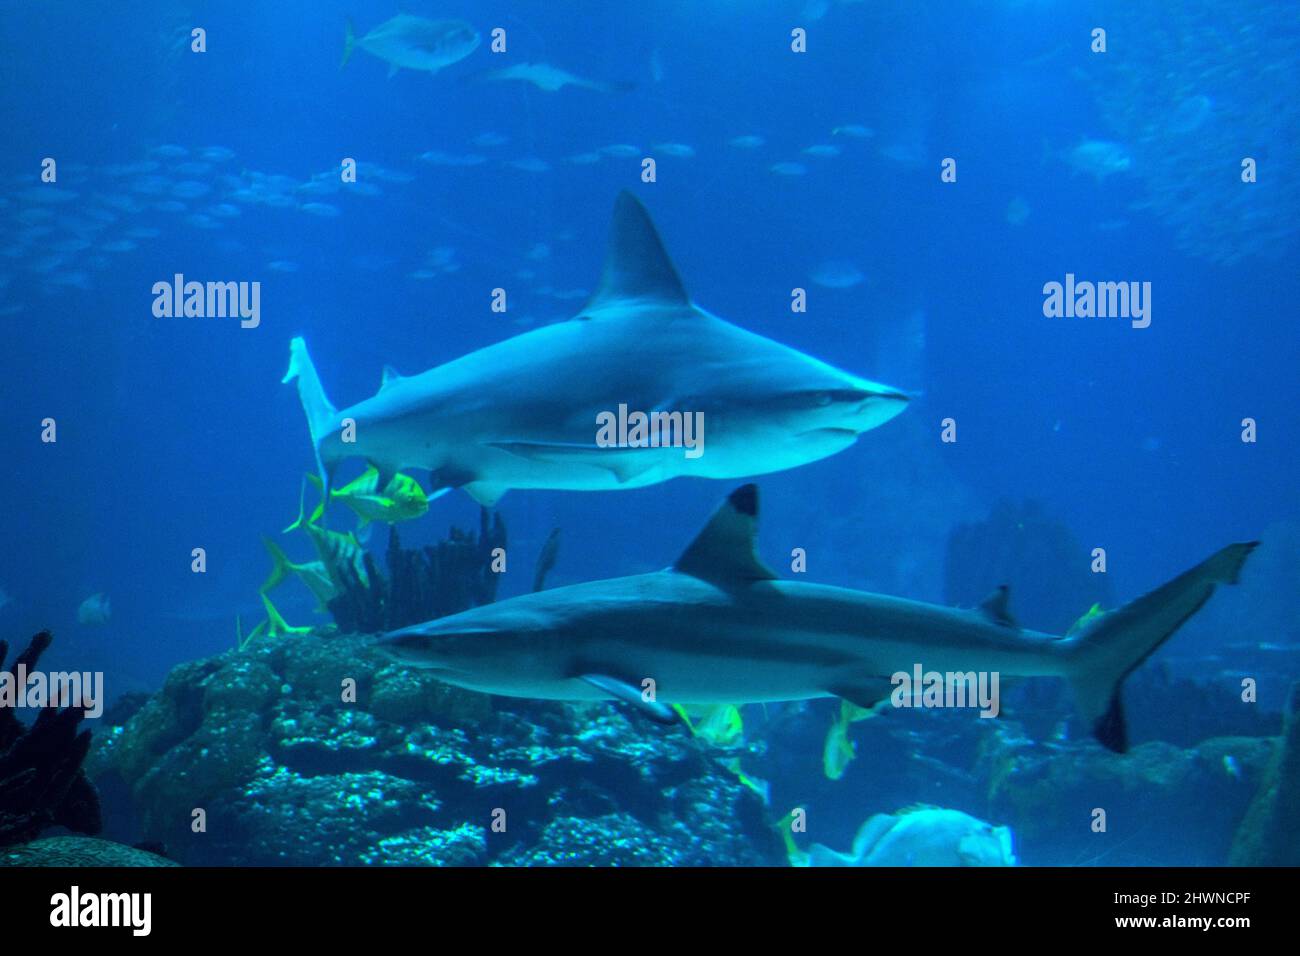 Lo squalo di barriera corallina (Tubarão-de-pontas-negras-do-recife) e lo squalo di Nannosio (Tubarão-de-focinho-negro) navigano sull'acquario della vasca dello squalo. Foto Stock